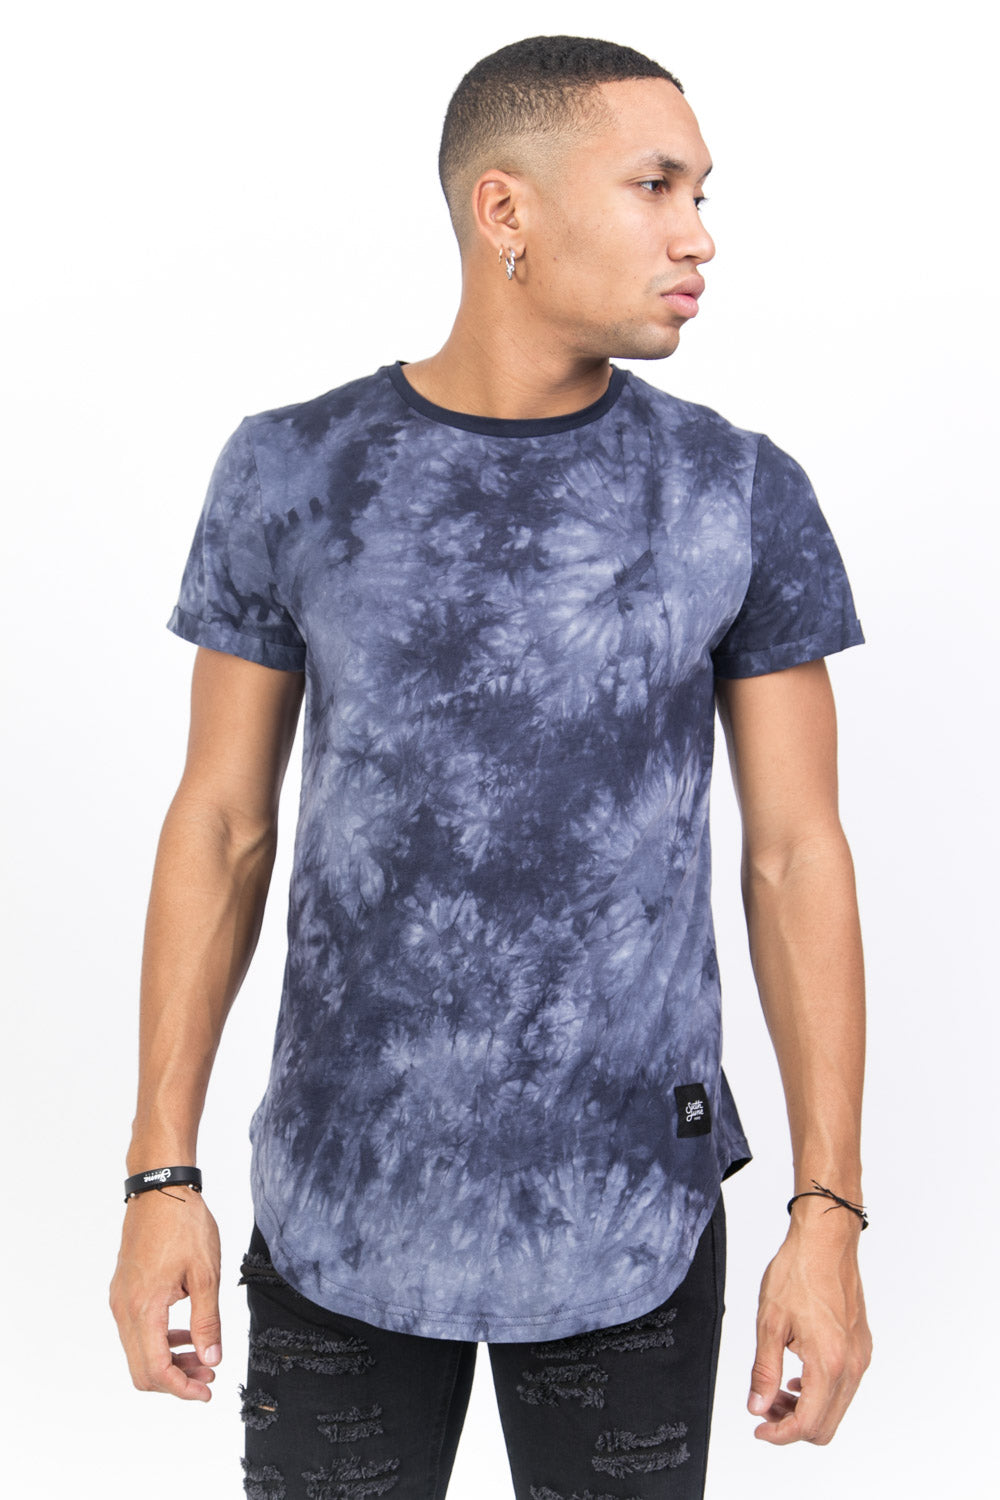 Sixth June - T-shirt délavé noir bleu